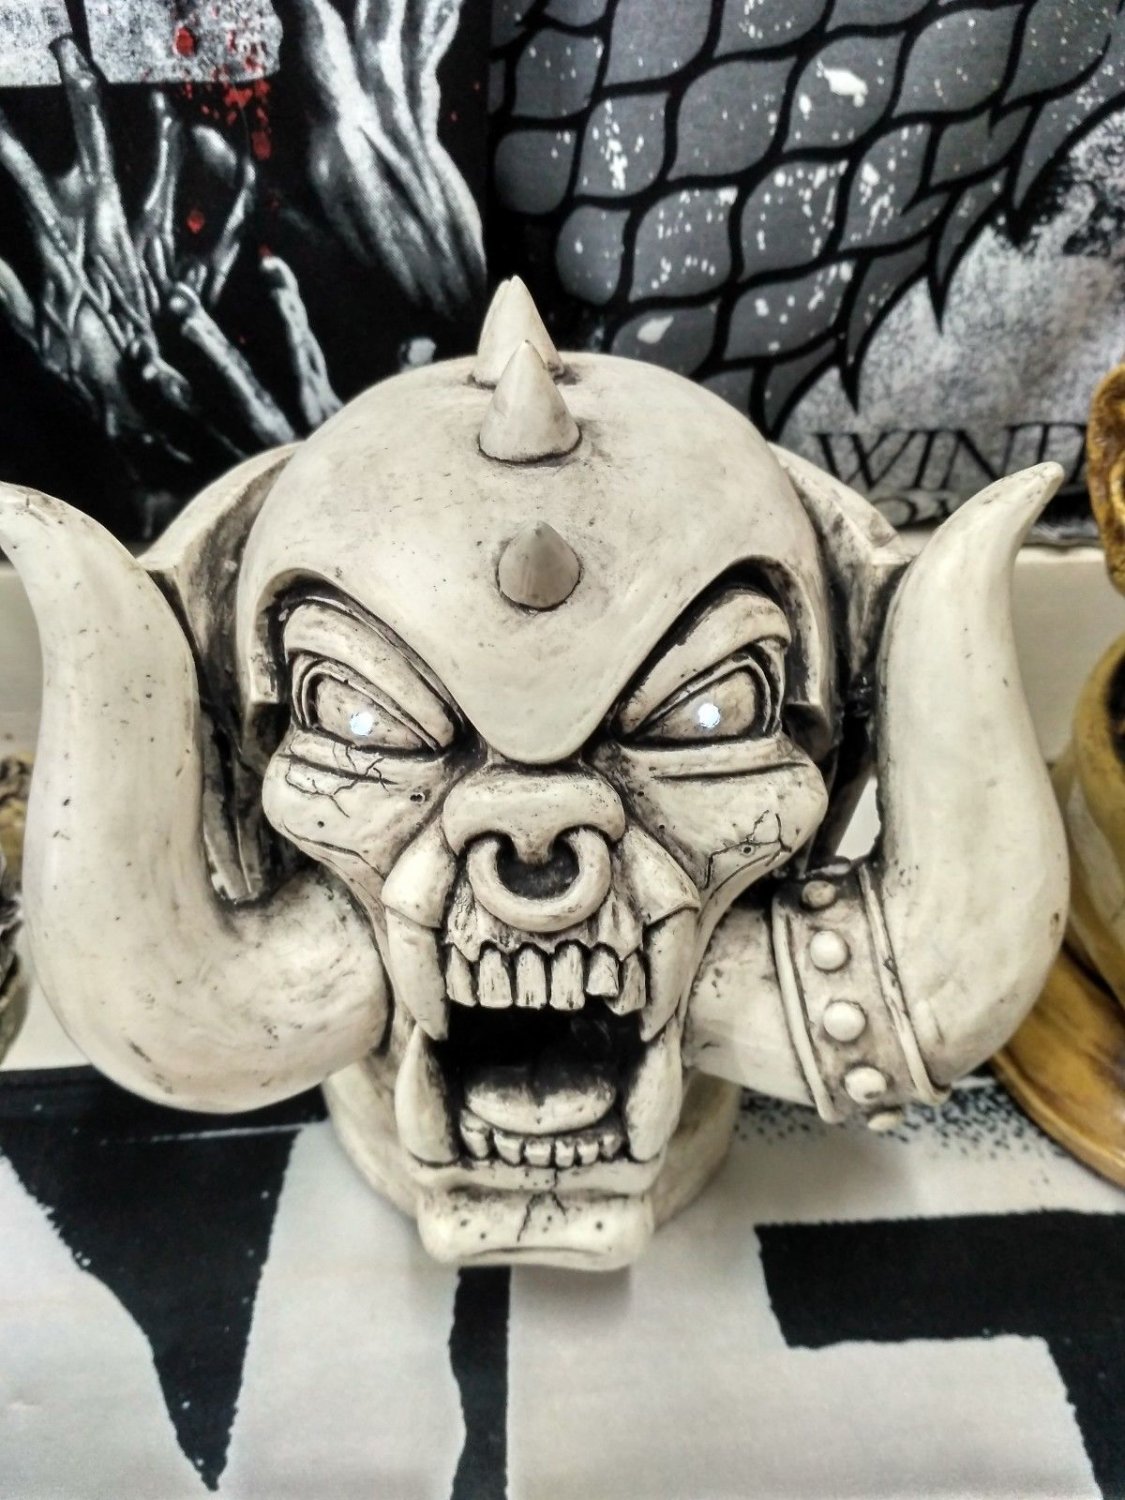 MOTORHEAD - England SCULPTURE - statue - bust Heavy thrash metal